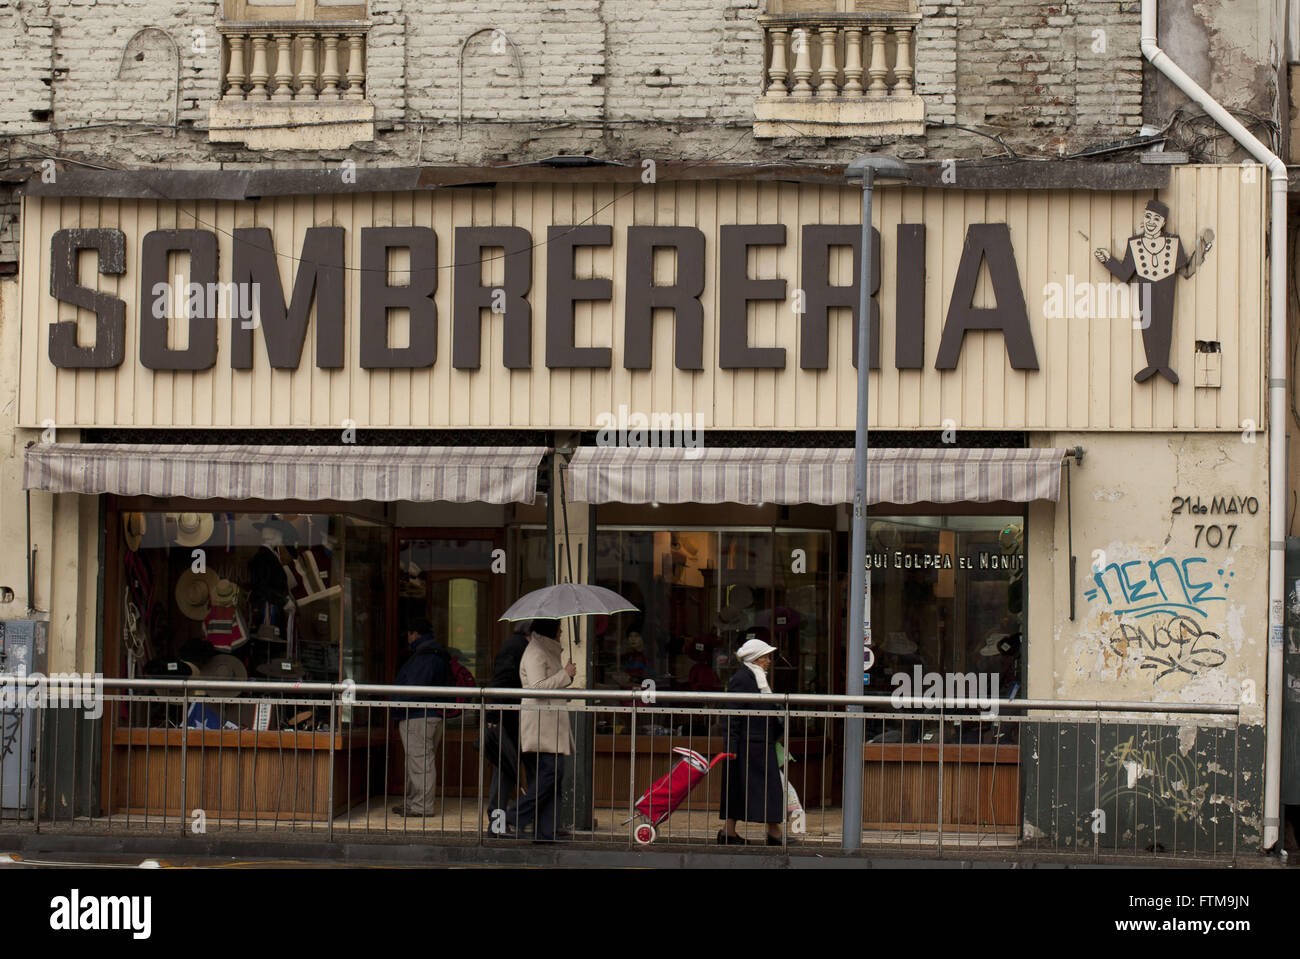 Sombrereria - trade sundecks in the city center of Santiago - Chile Stock Photo